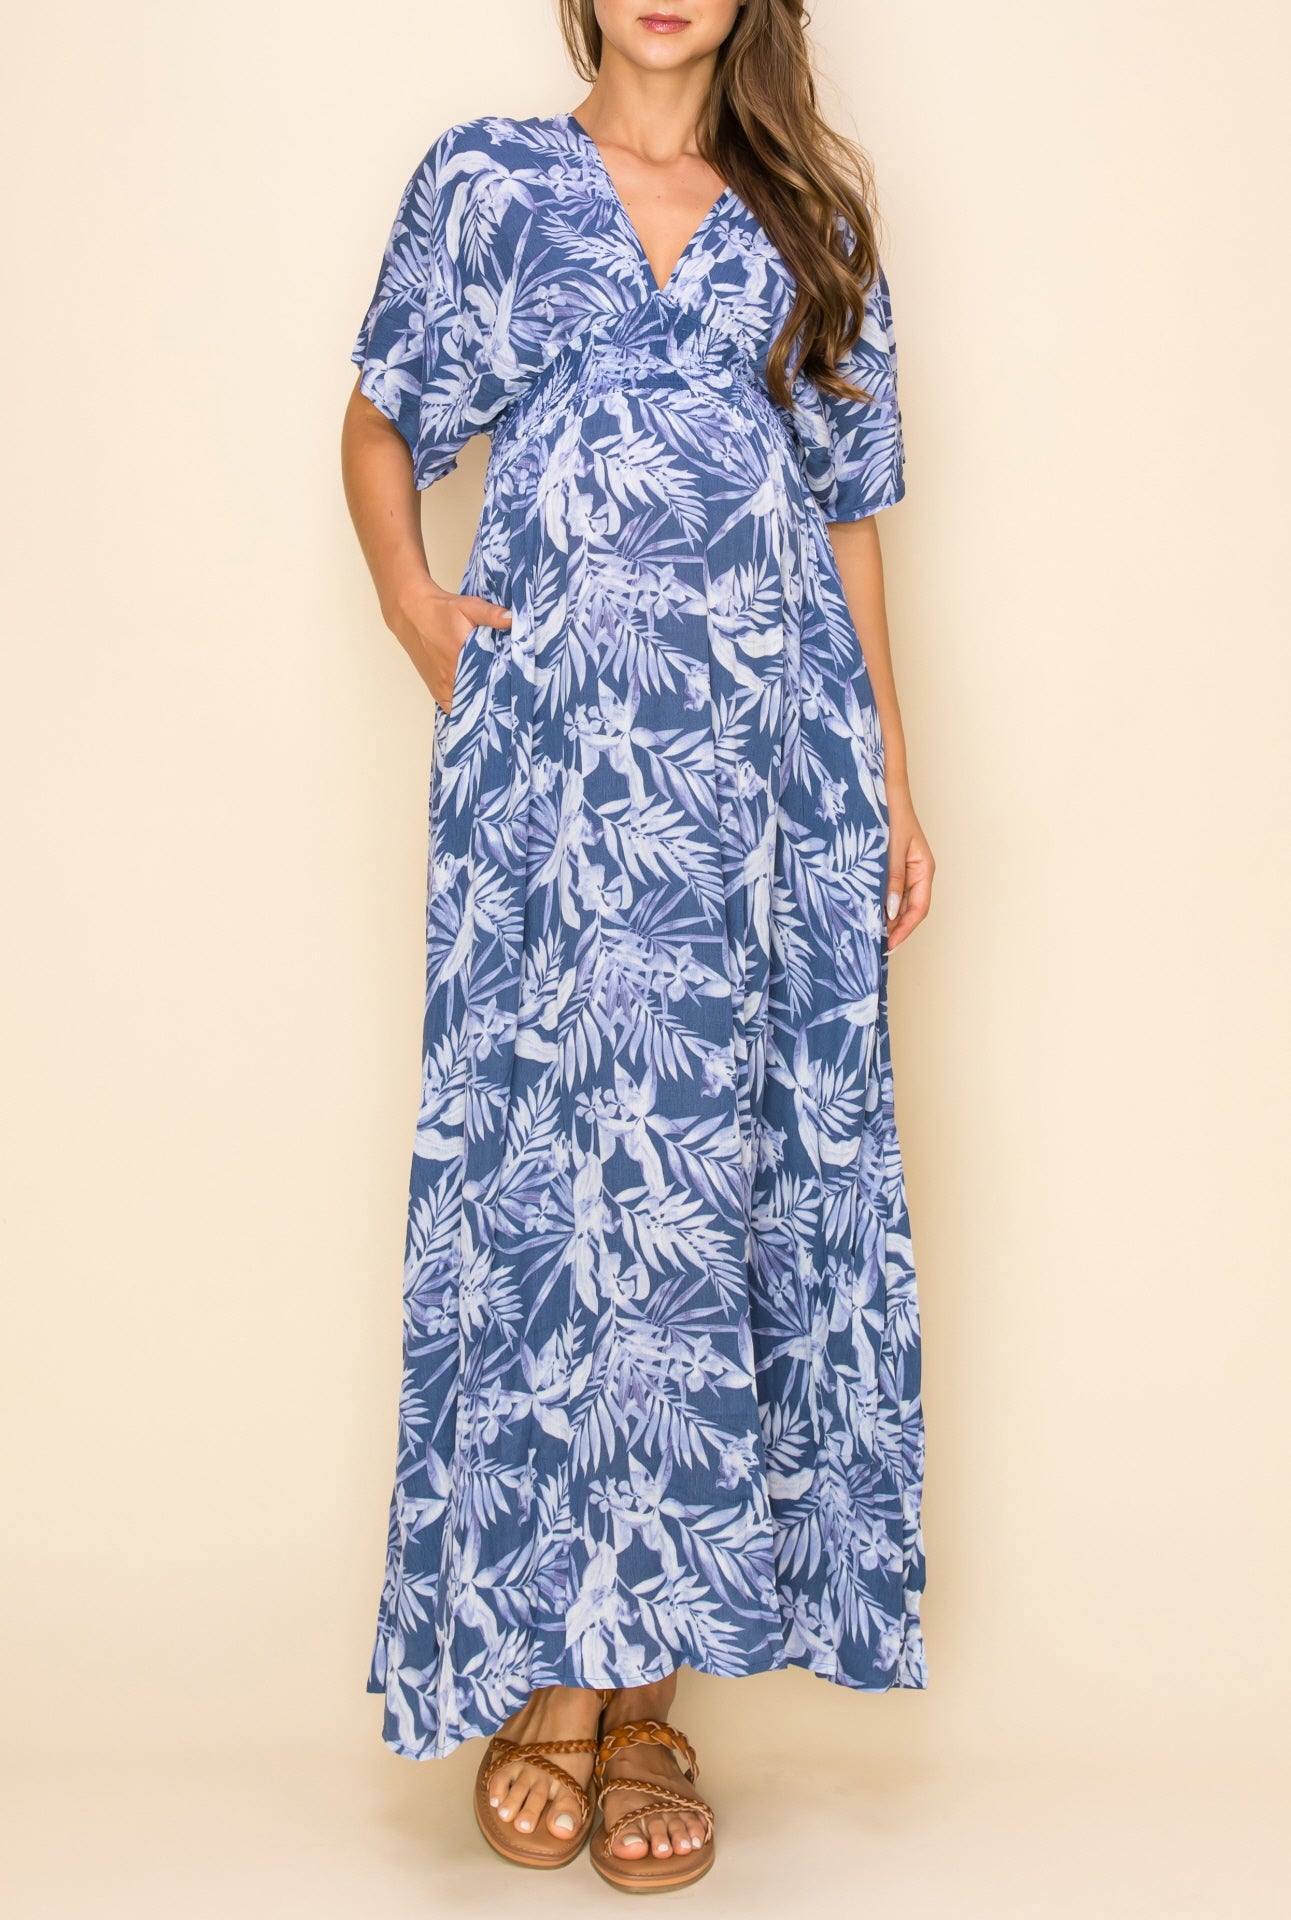 Annabelle Floral V Neck Dolman Sleeve Maxi Dress with Pockets